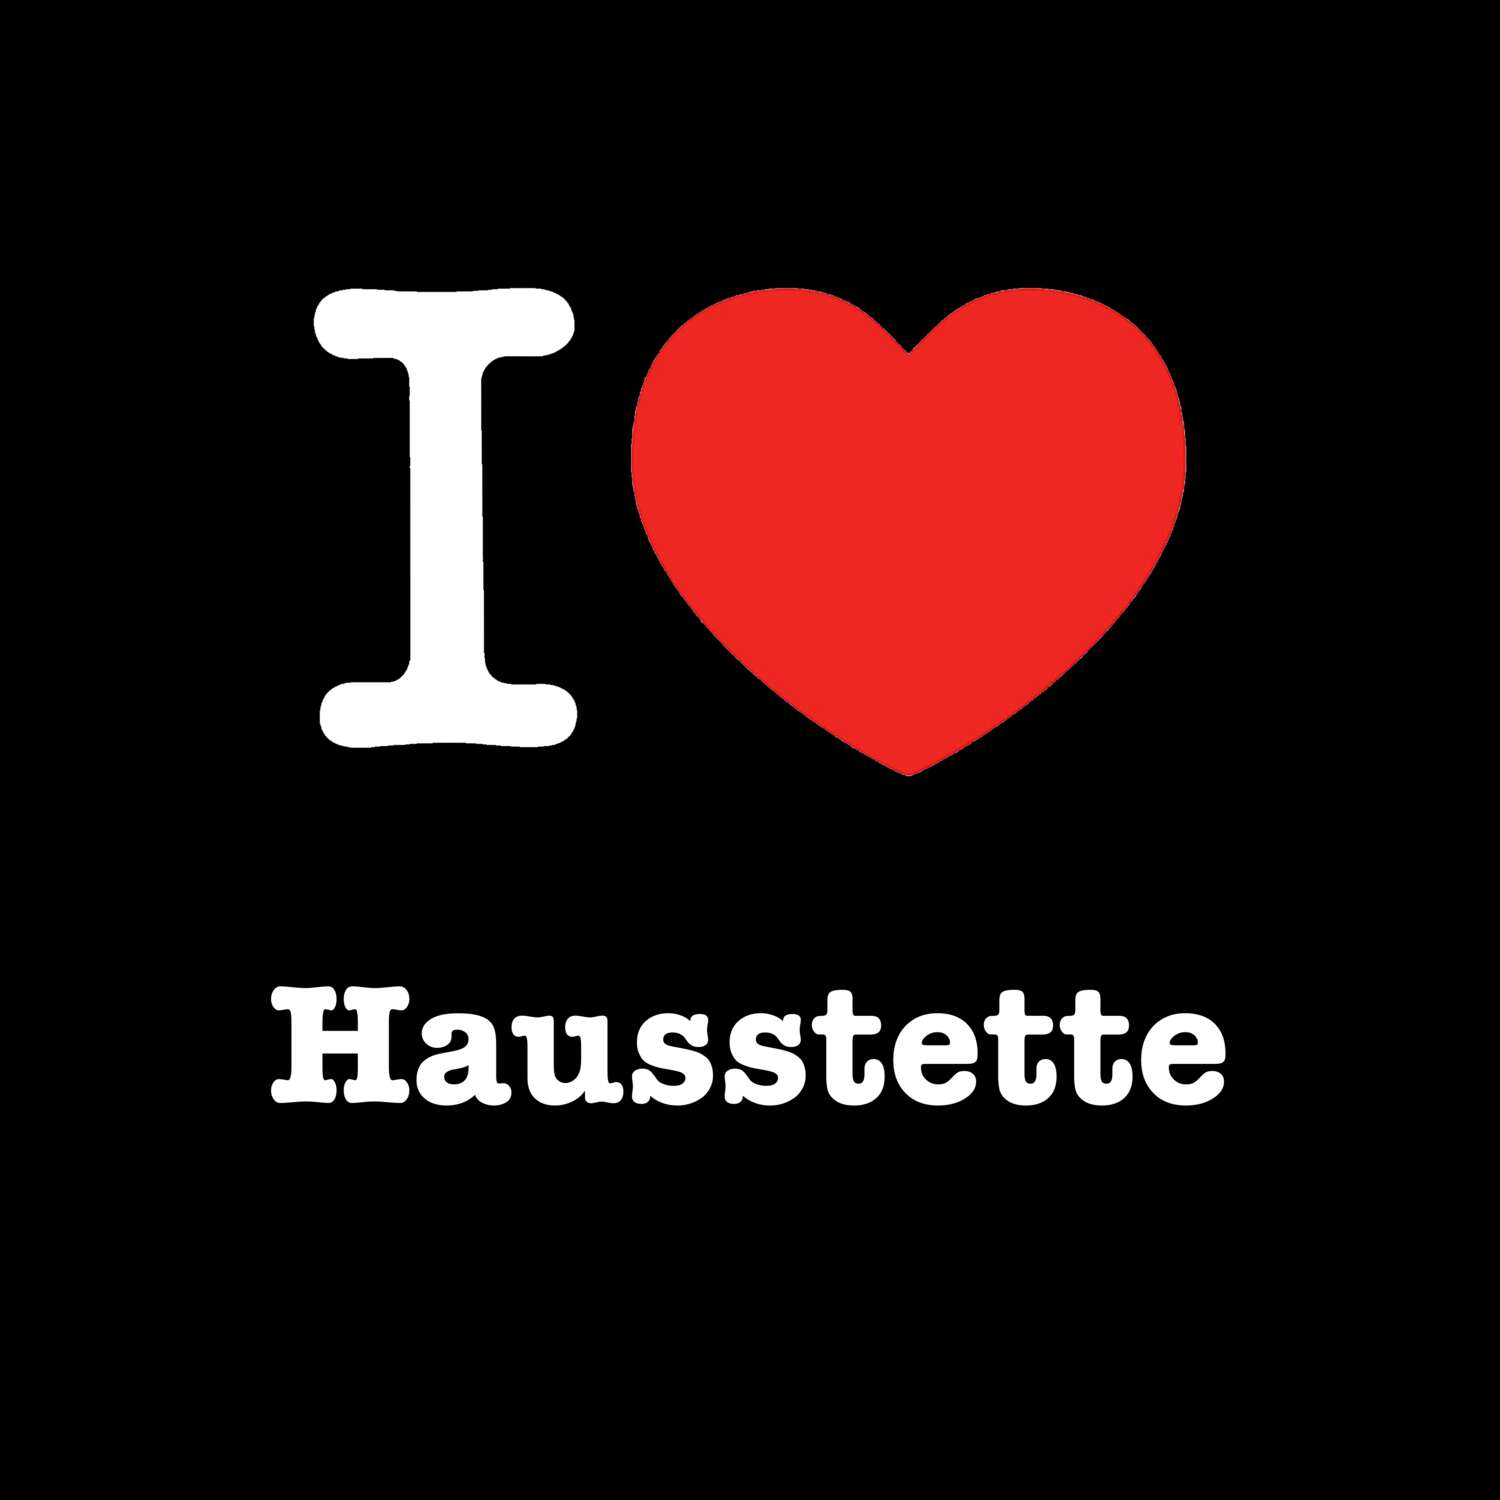 Hausstette T-Shirt »I love«